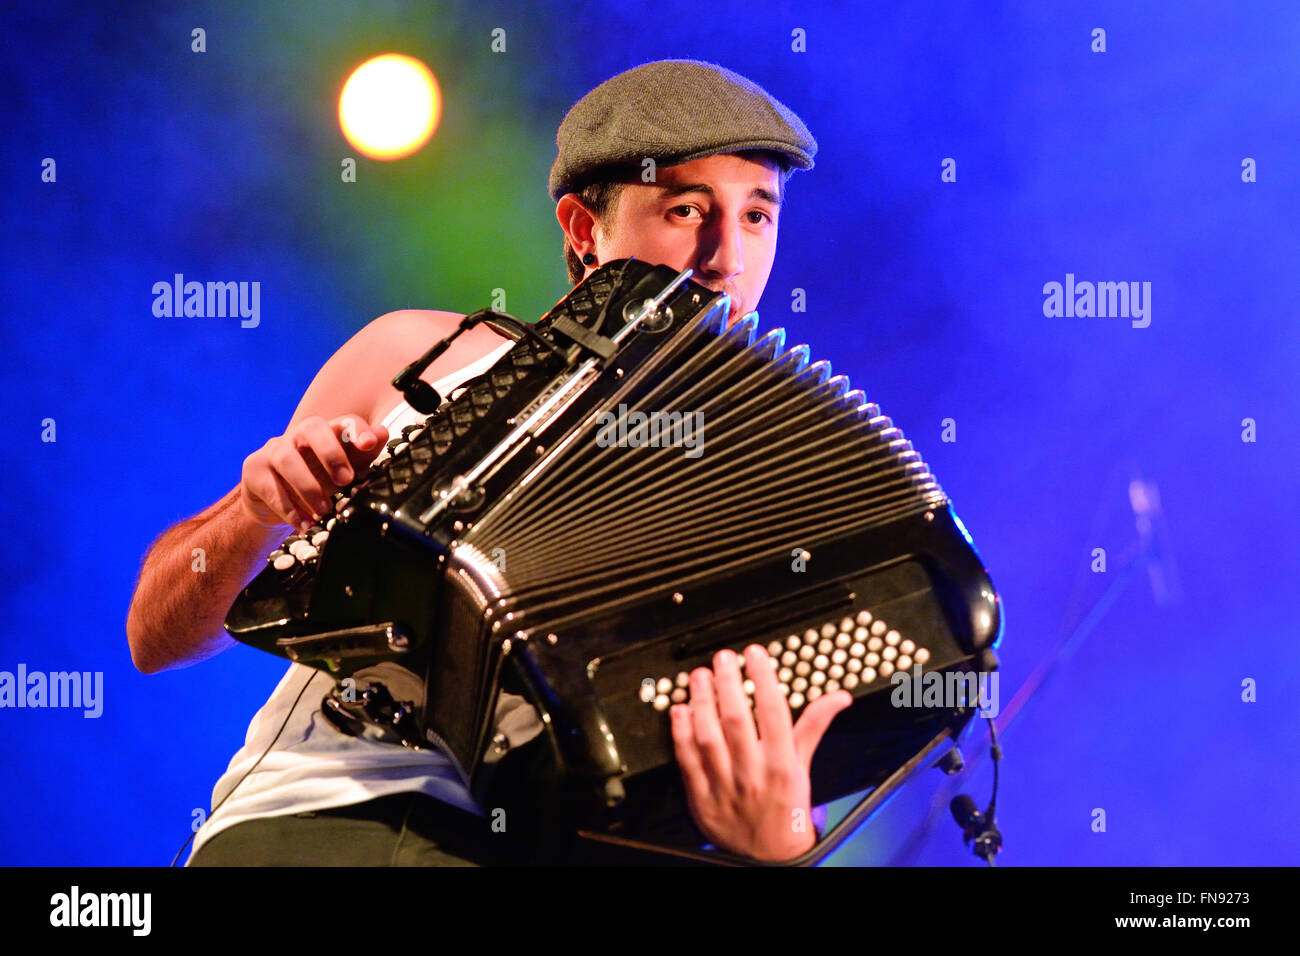 BILBAO, Spanien - NOV 01: Akkordeon-Spieler der La Moda (Band) live-Musik-Show am Bime Festival. Stockfoto